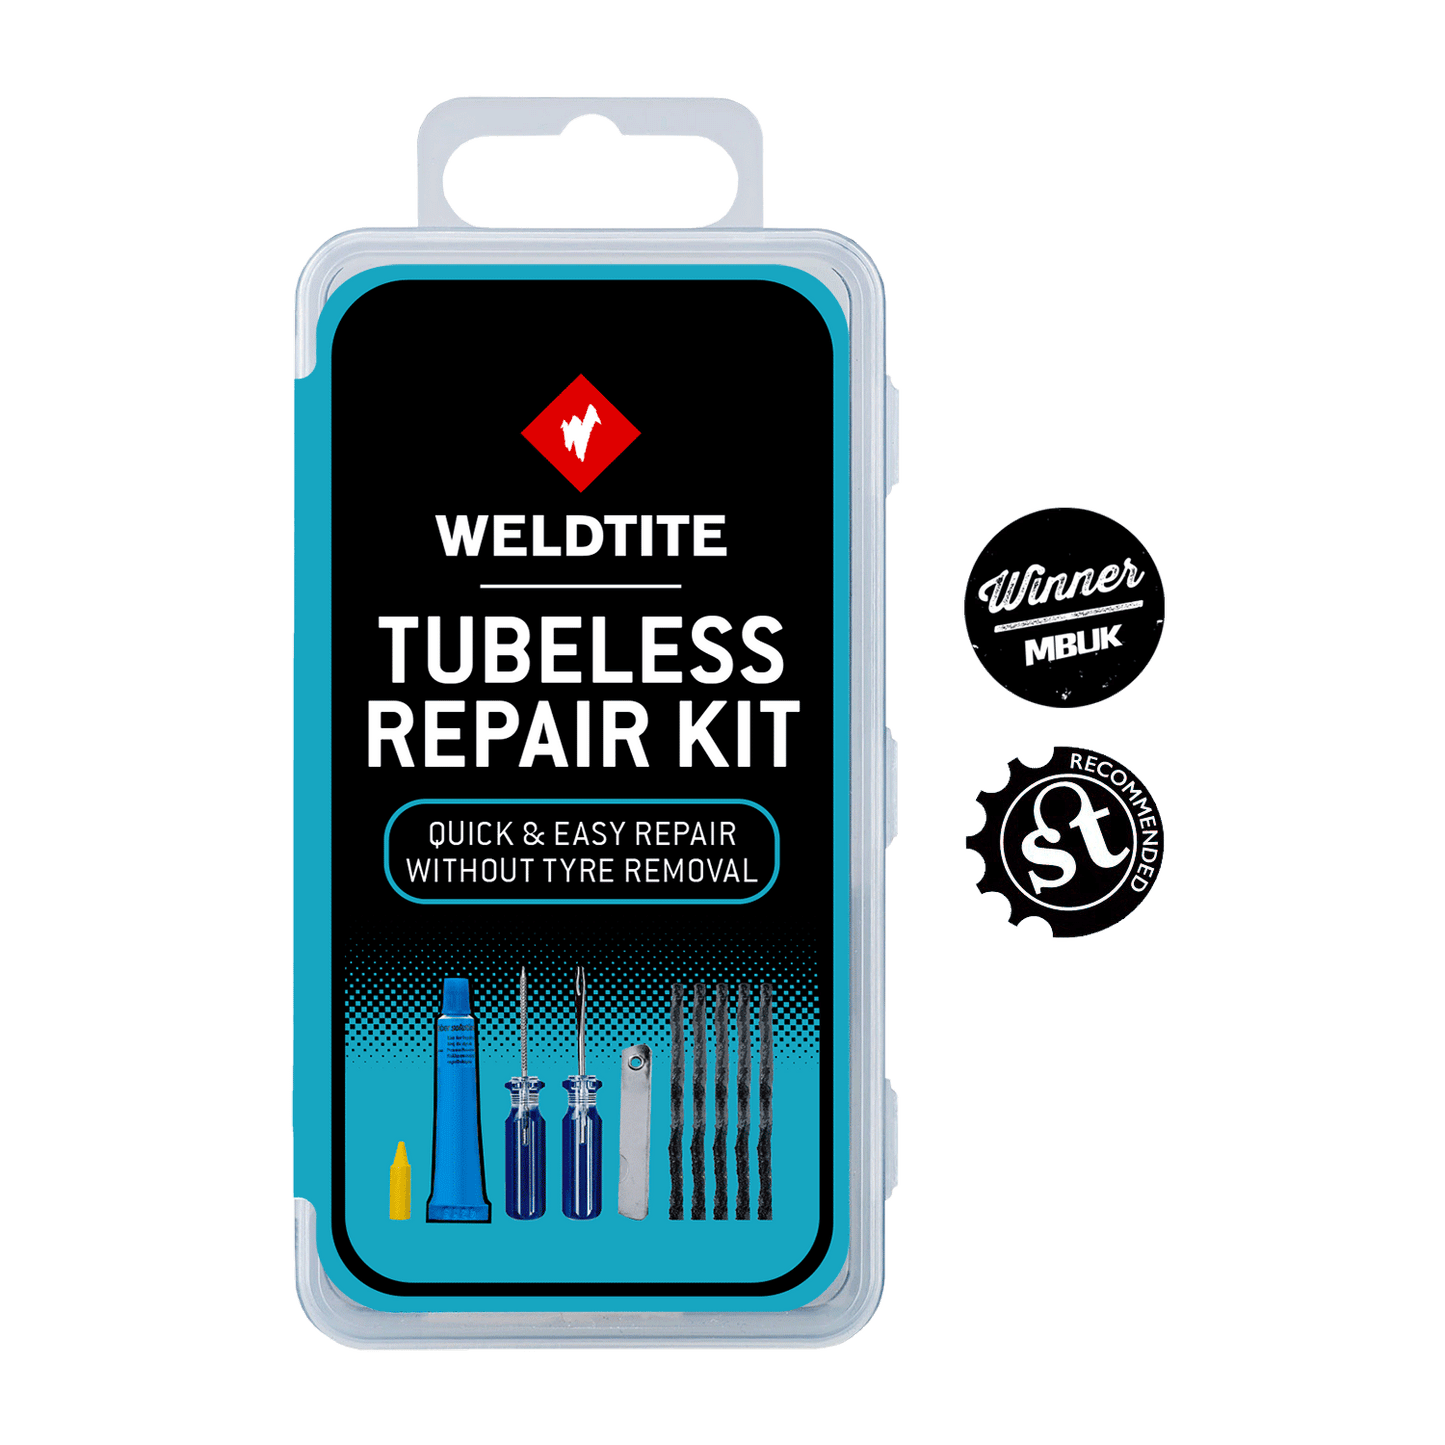 Weldtite Tubeless Repair Kit - Efficient Tire Fix